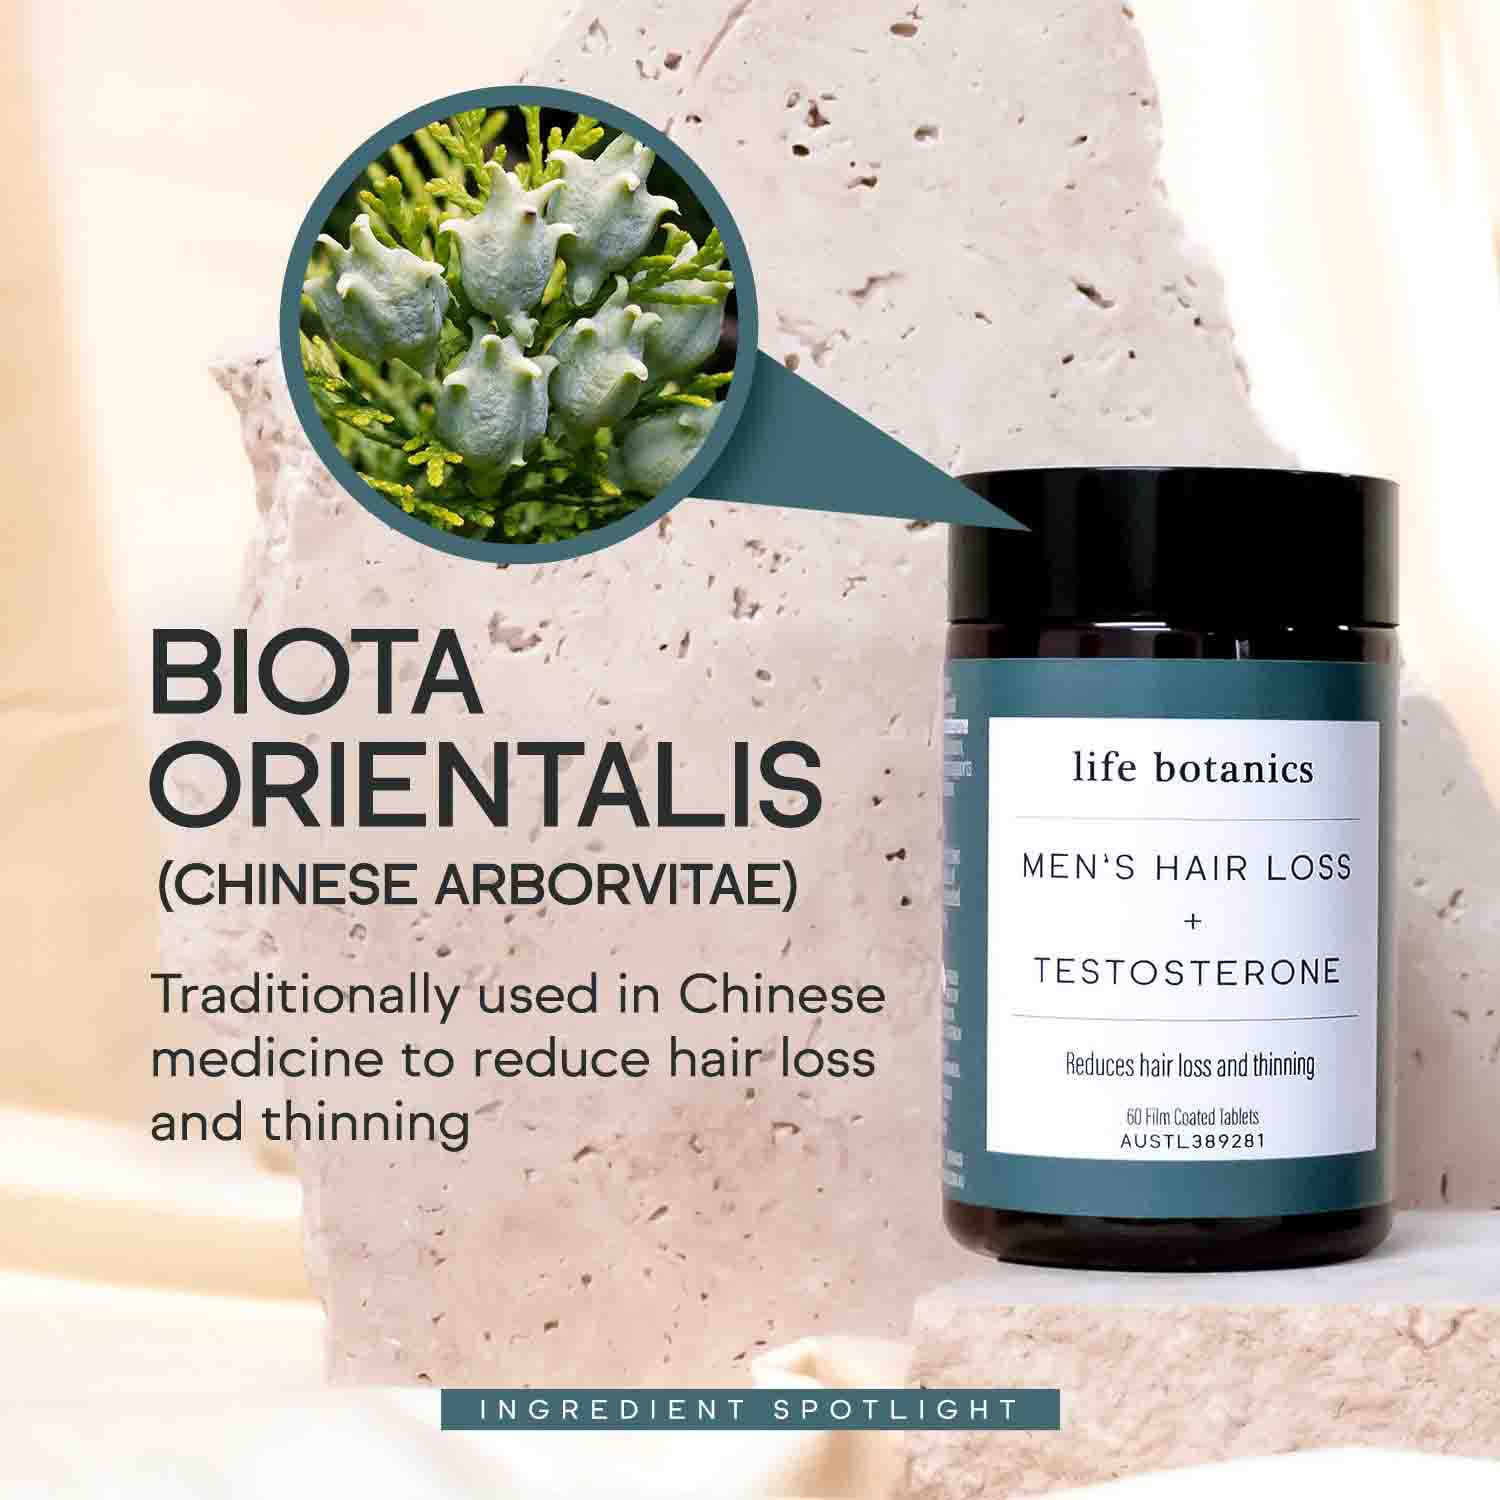 life botanics Men's Hair Loss + Testosterone Biota Orientalis 180